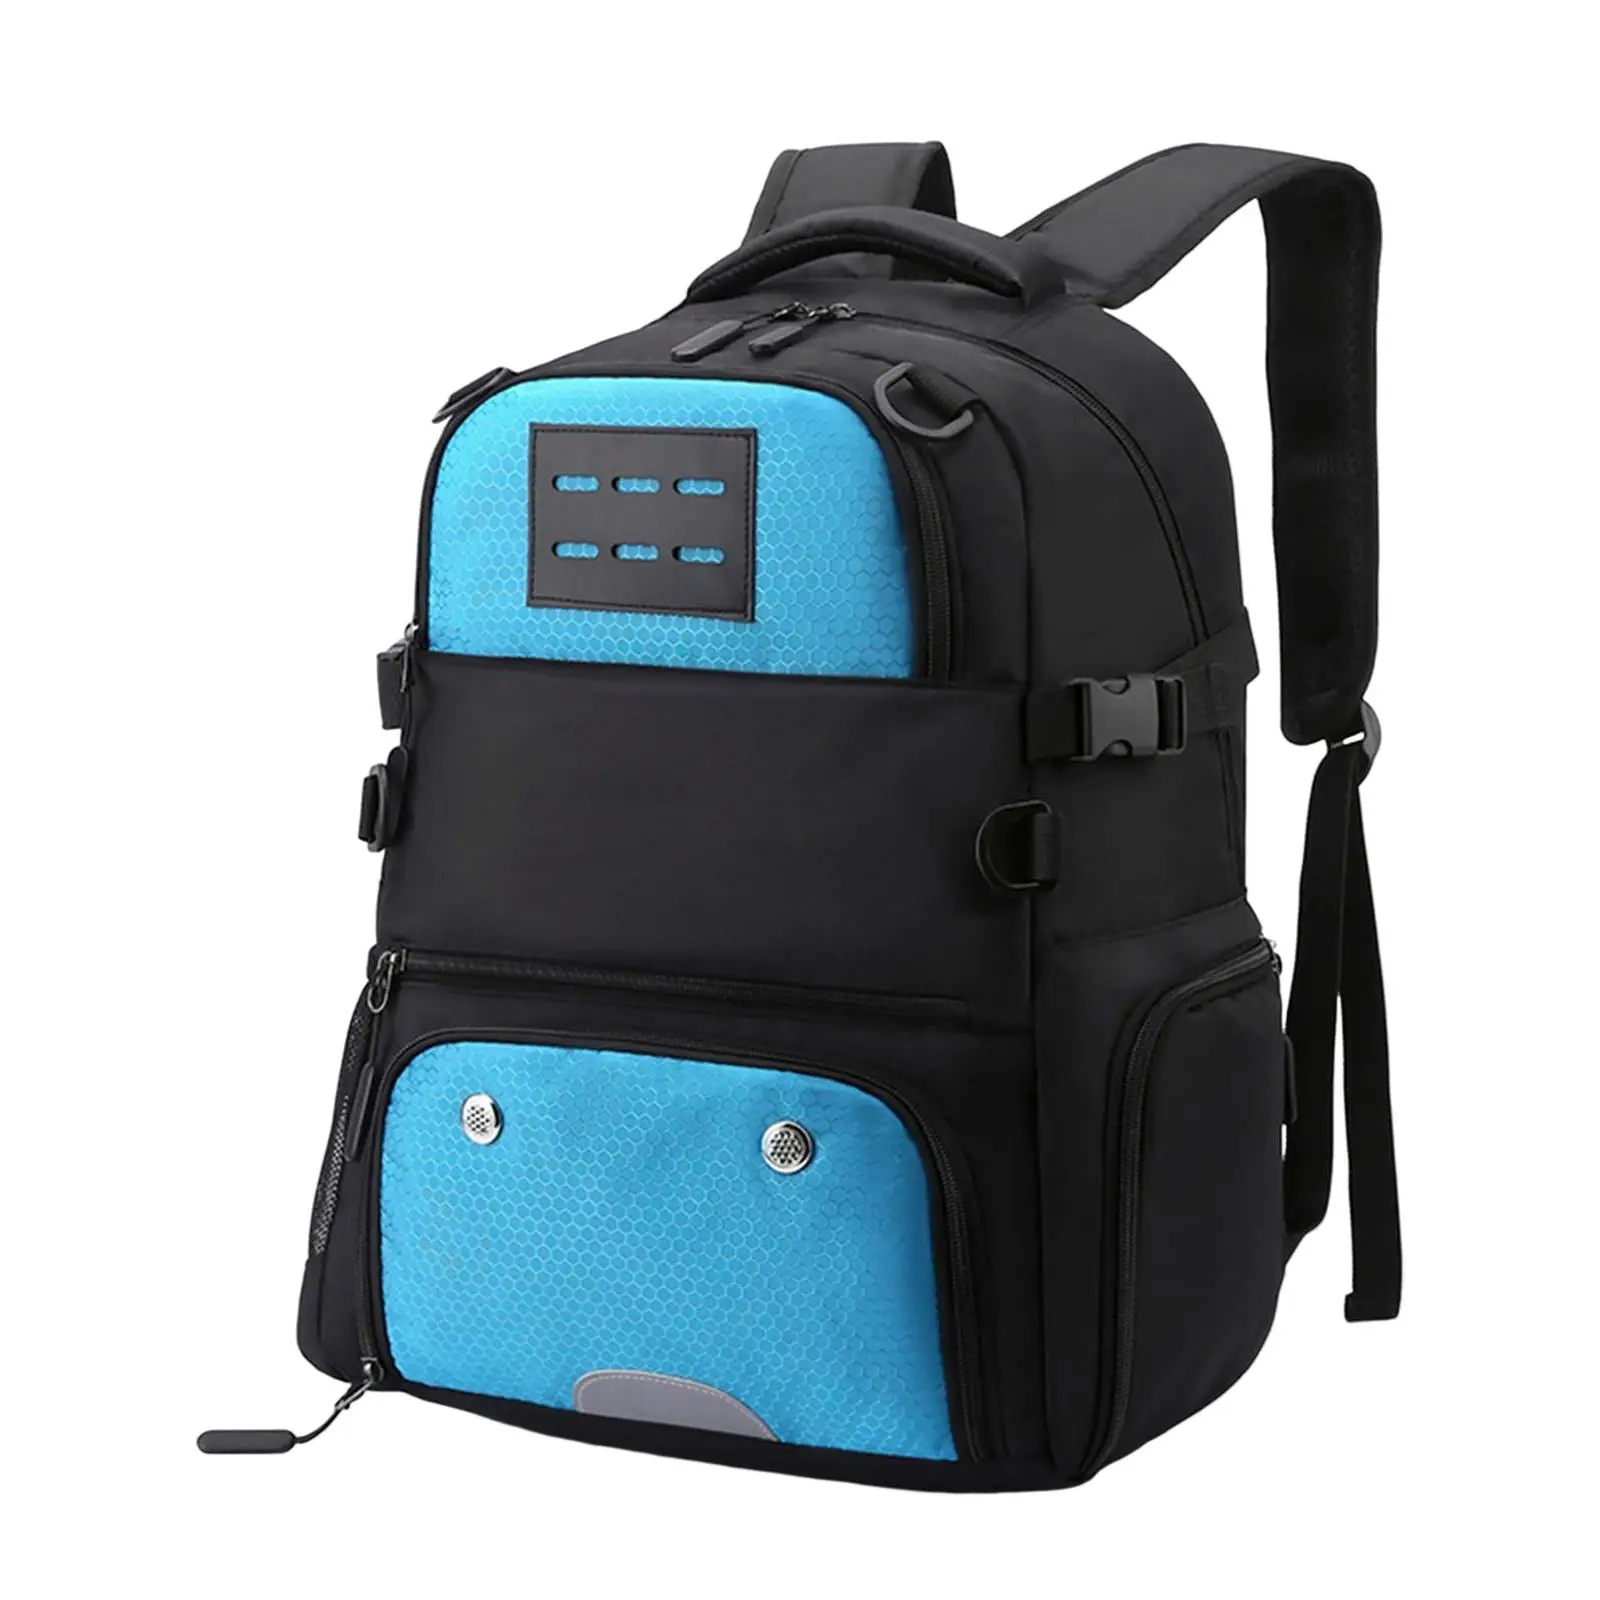 Basketball Football Backpack Pocket Equipment Hiking Bag Daypack Soccer Bag for Volleyball Gym Sports Fitness Girls